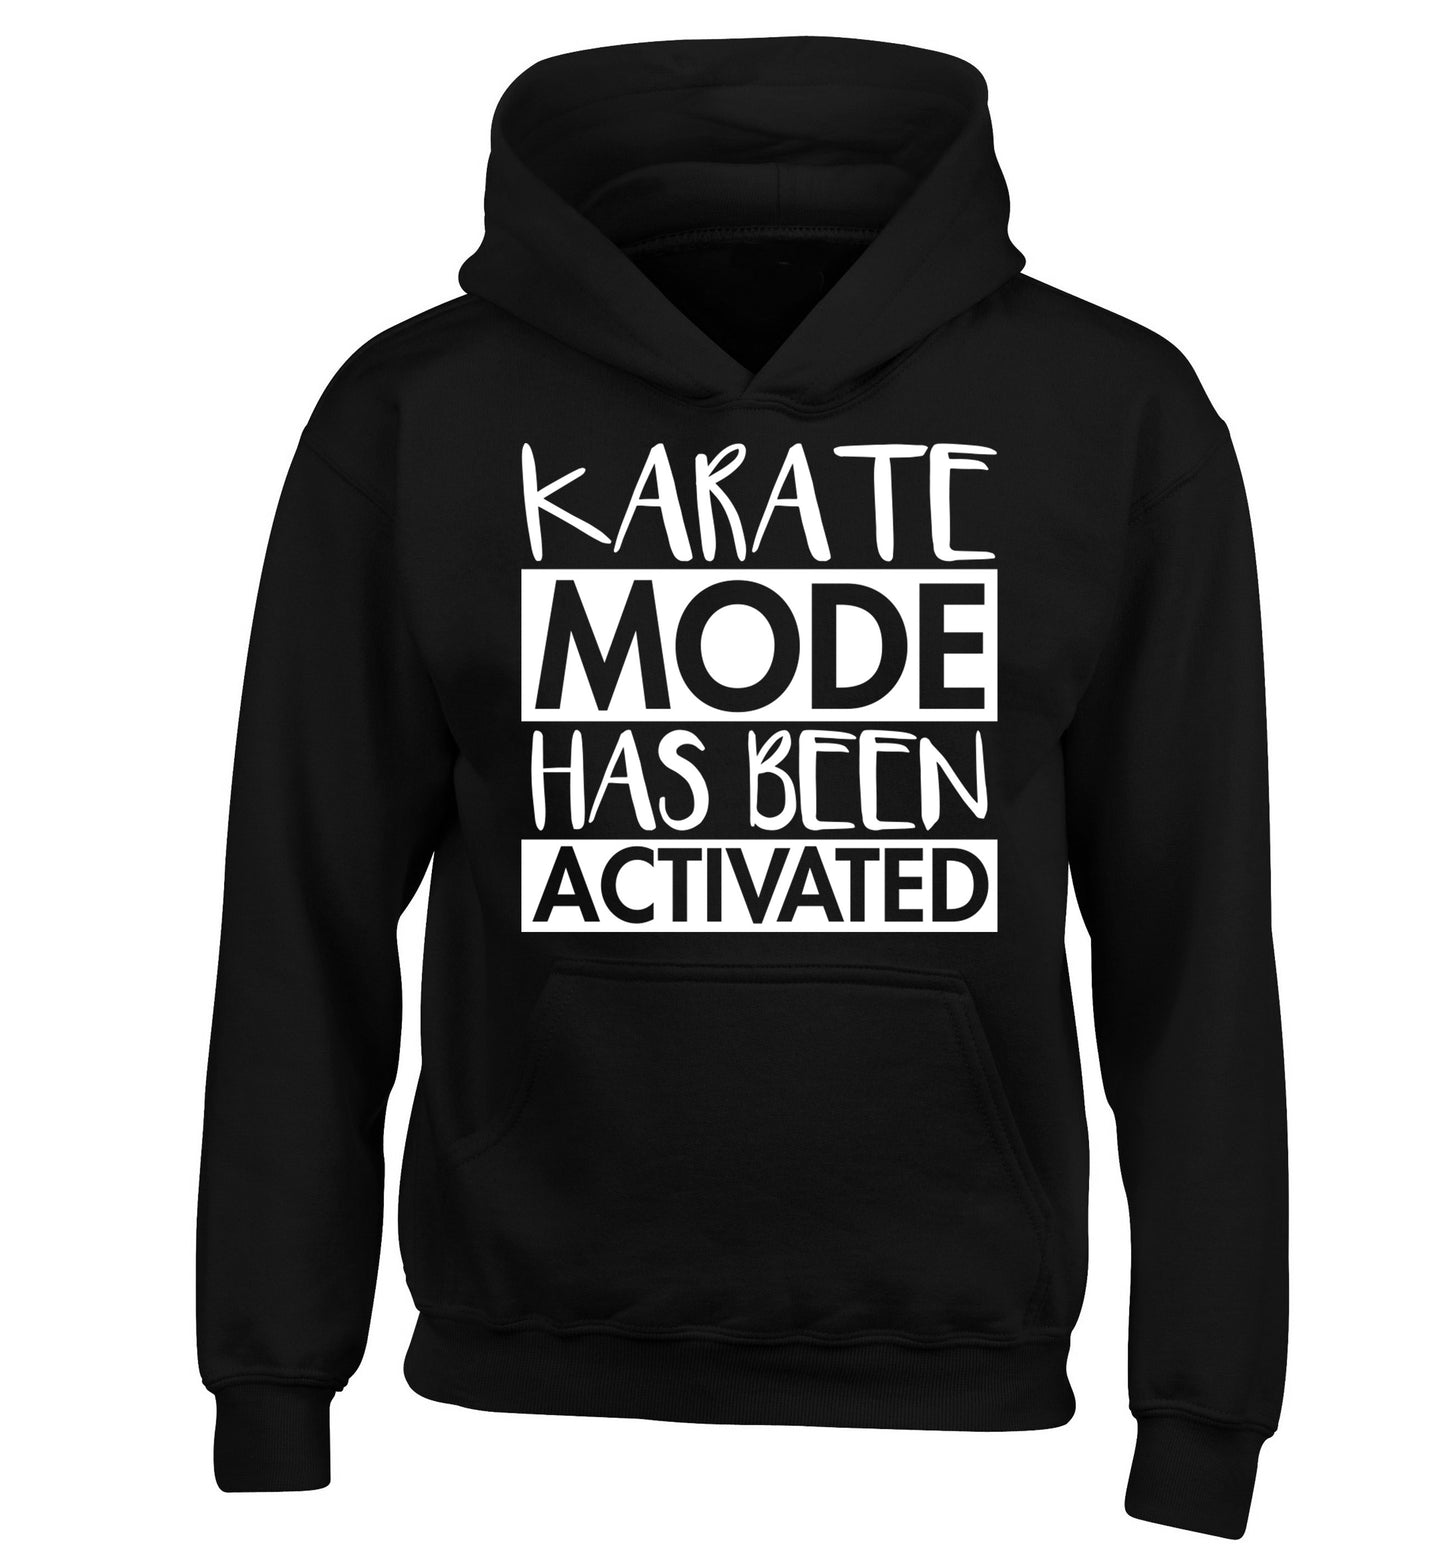 Karate mode activated children's black hoodie 12-14 Years